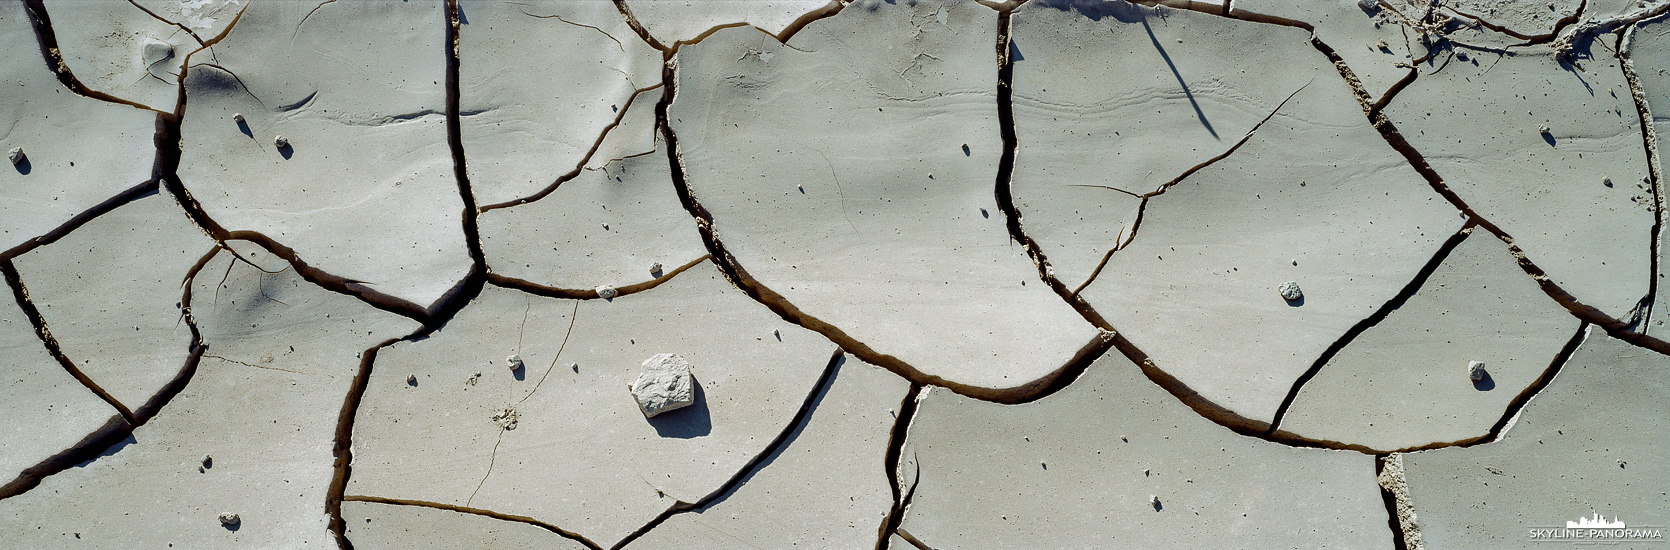 USA Panorama - Mudcracks als 6x17 Panorama im Death Valley Nationalpark.